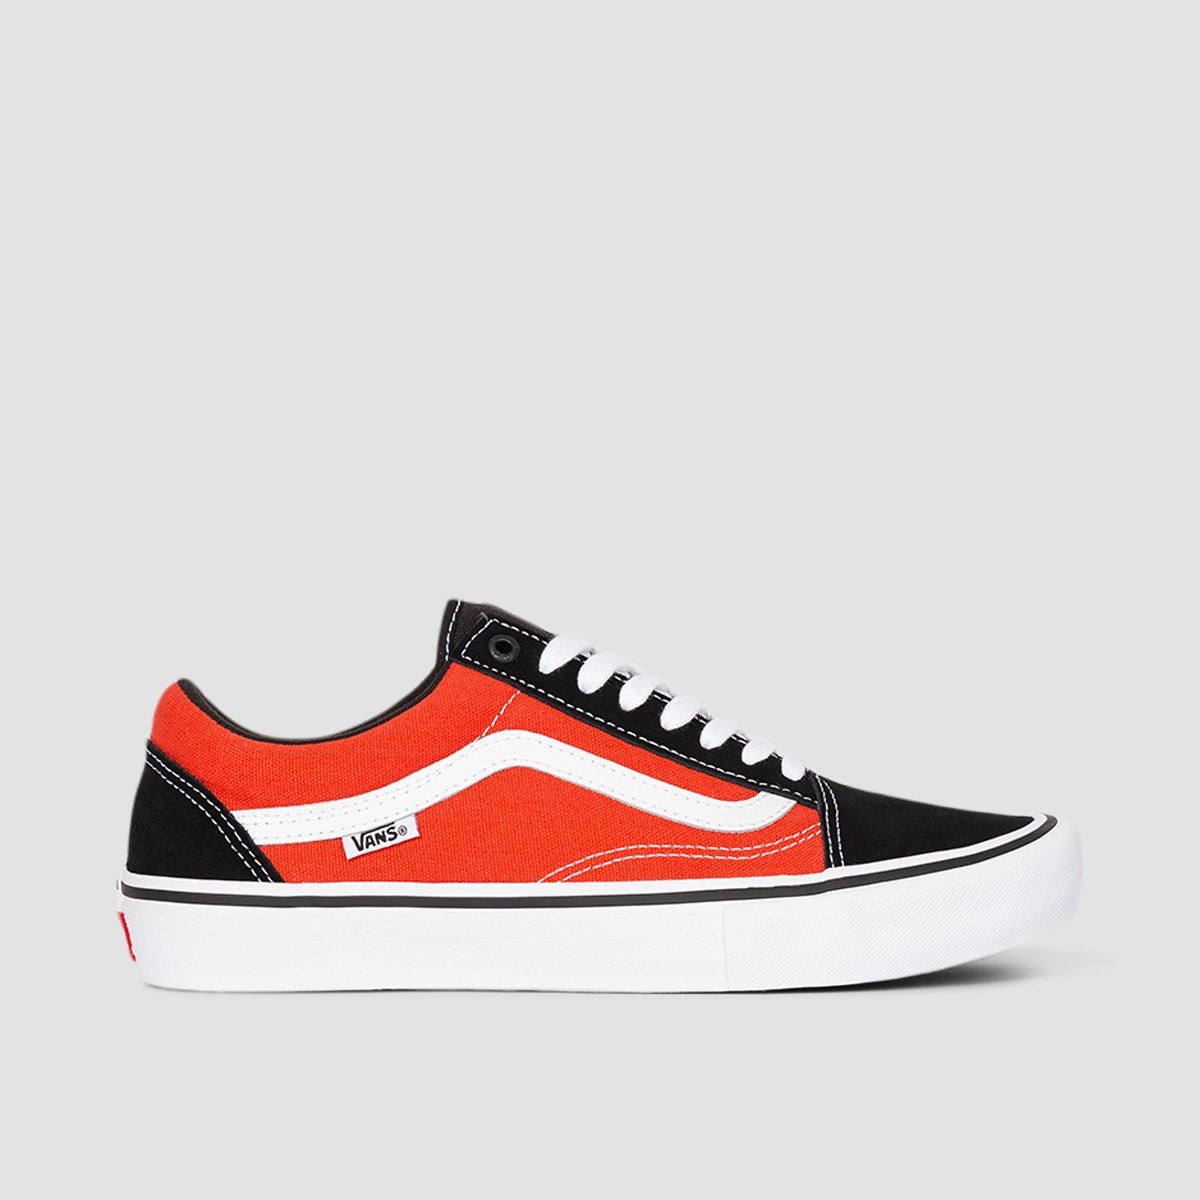 Vans Old Skool Pro Shoes - Black/Orange